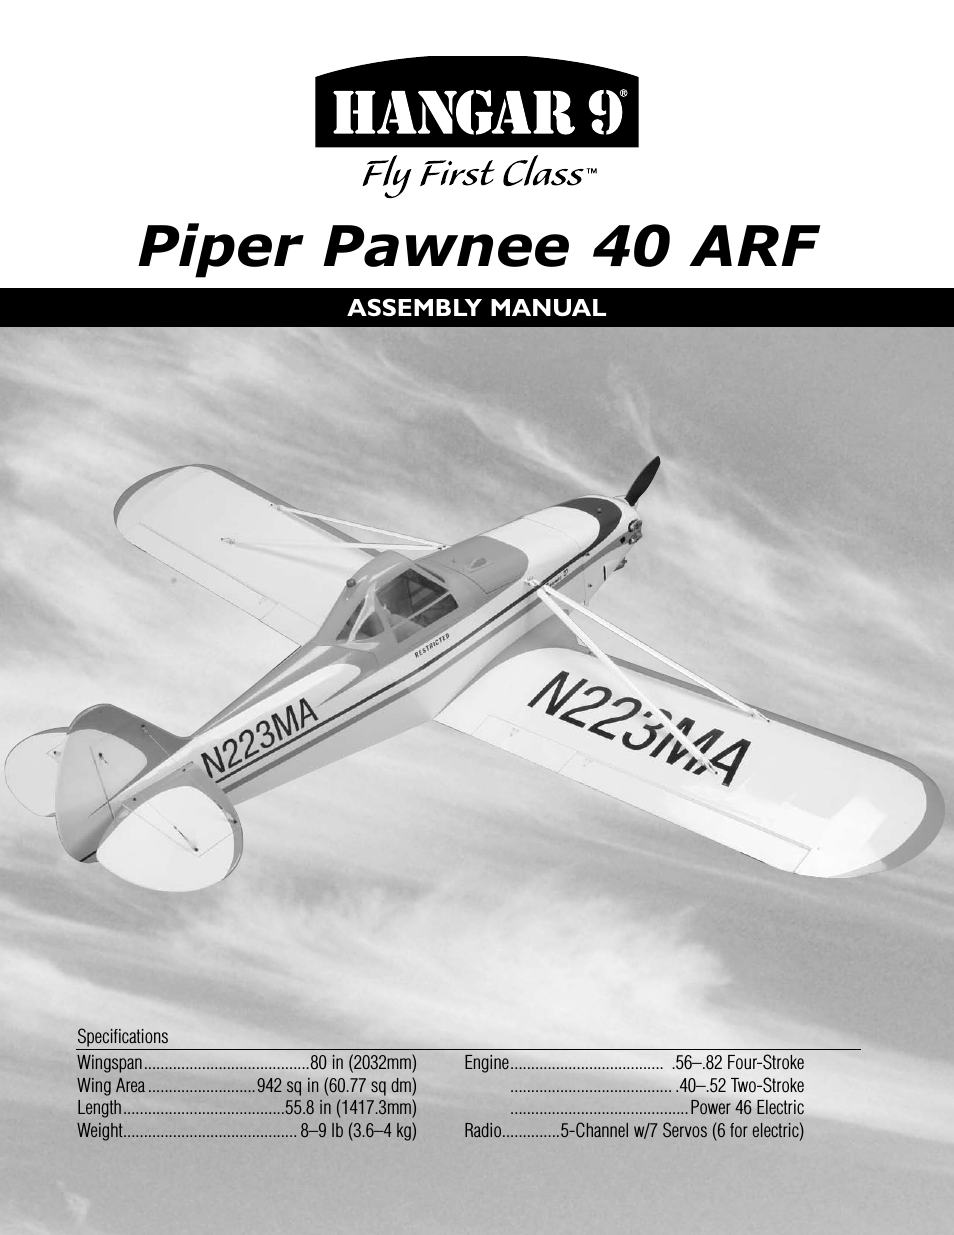 Piper Pawnee 40 ARF